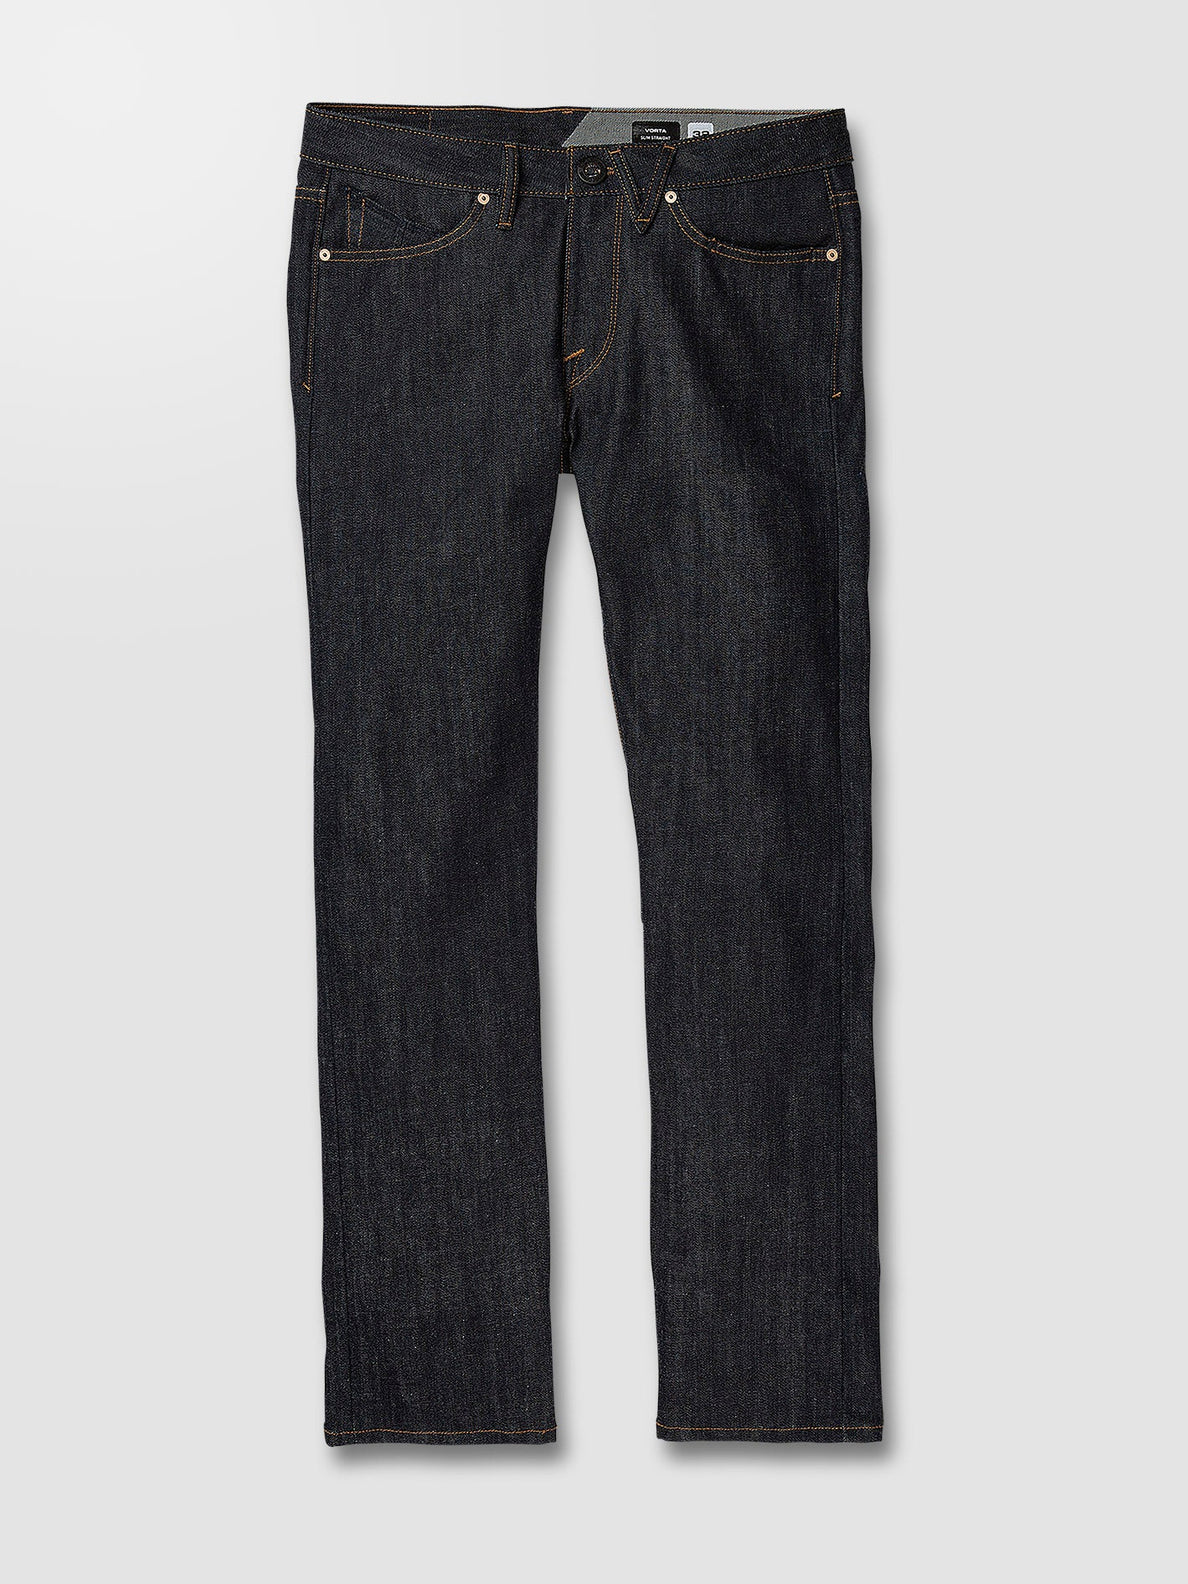 Vorta Jeans - RINSE (A1932203_RNSB) [9]